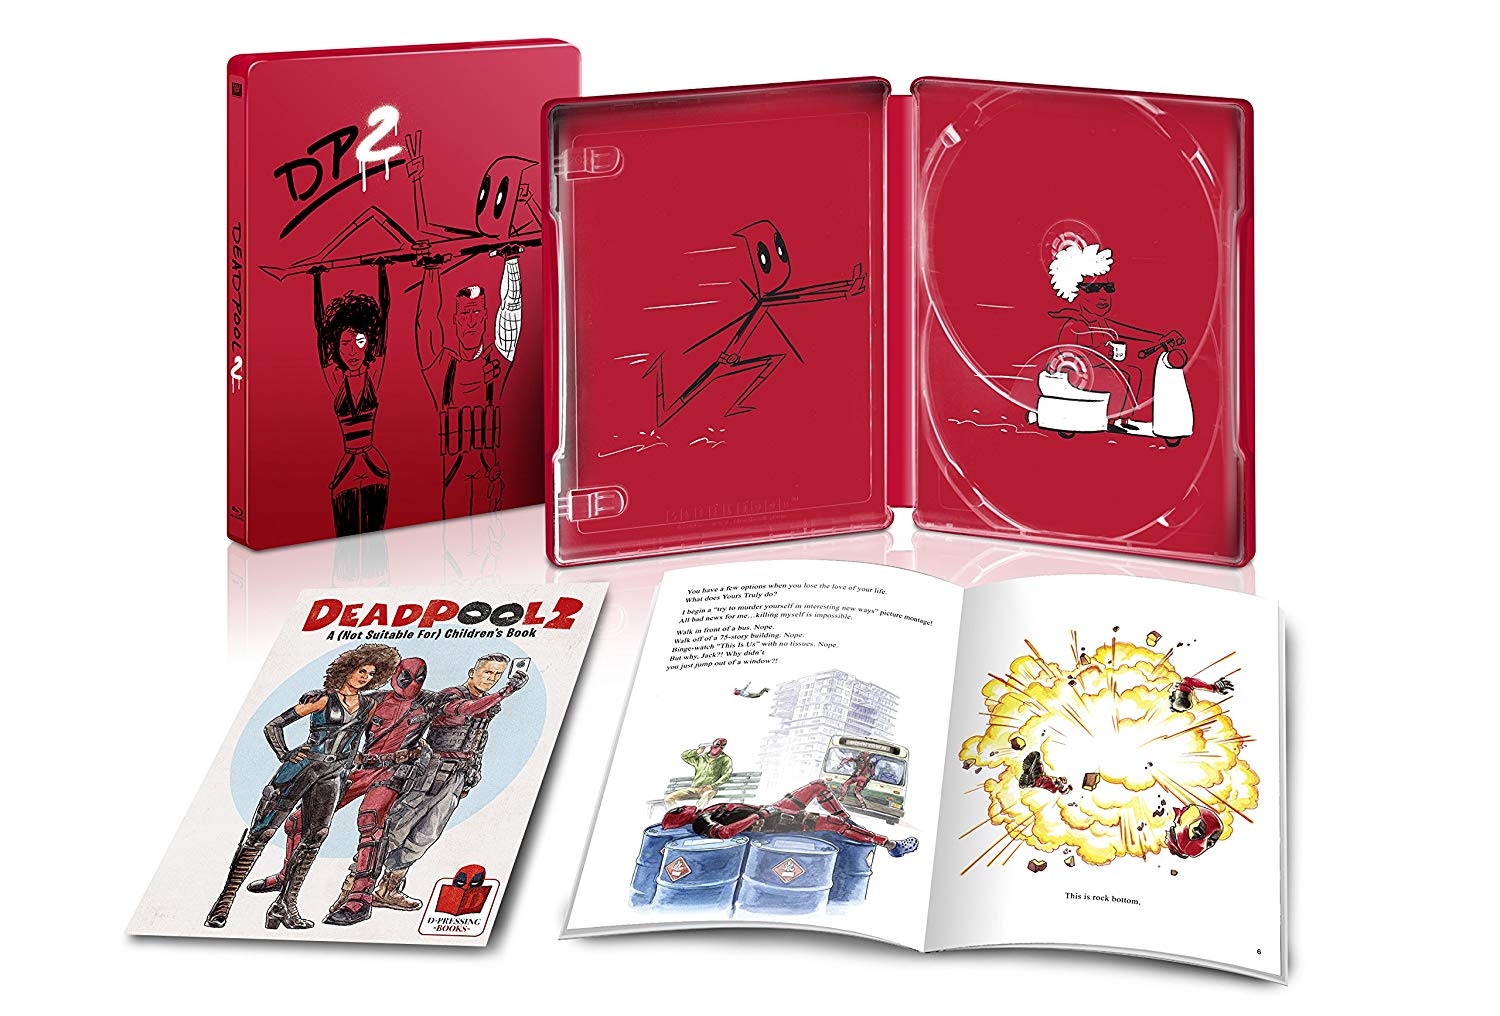 DEADPOOL2 steelbook デッドプール2 Amazon.co.jp限定 スチールブック